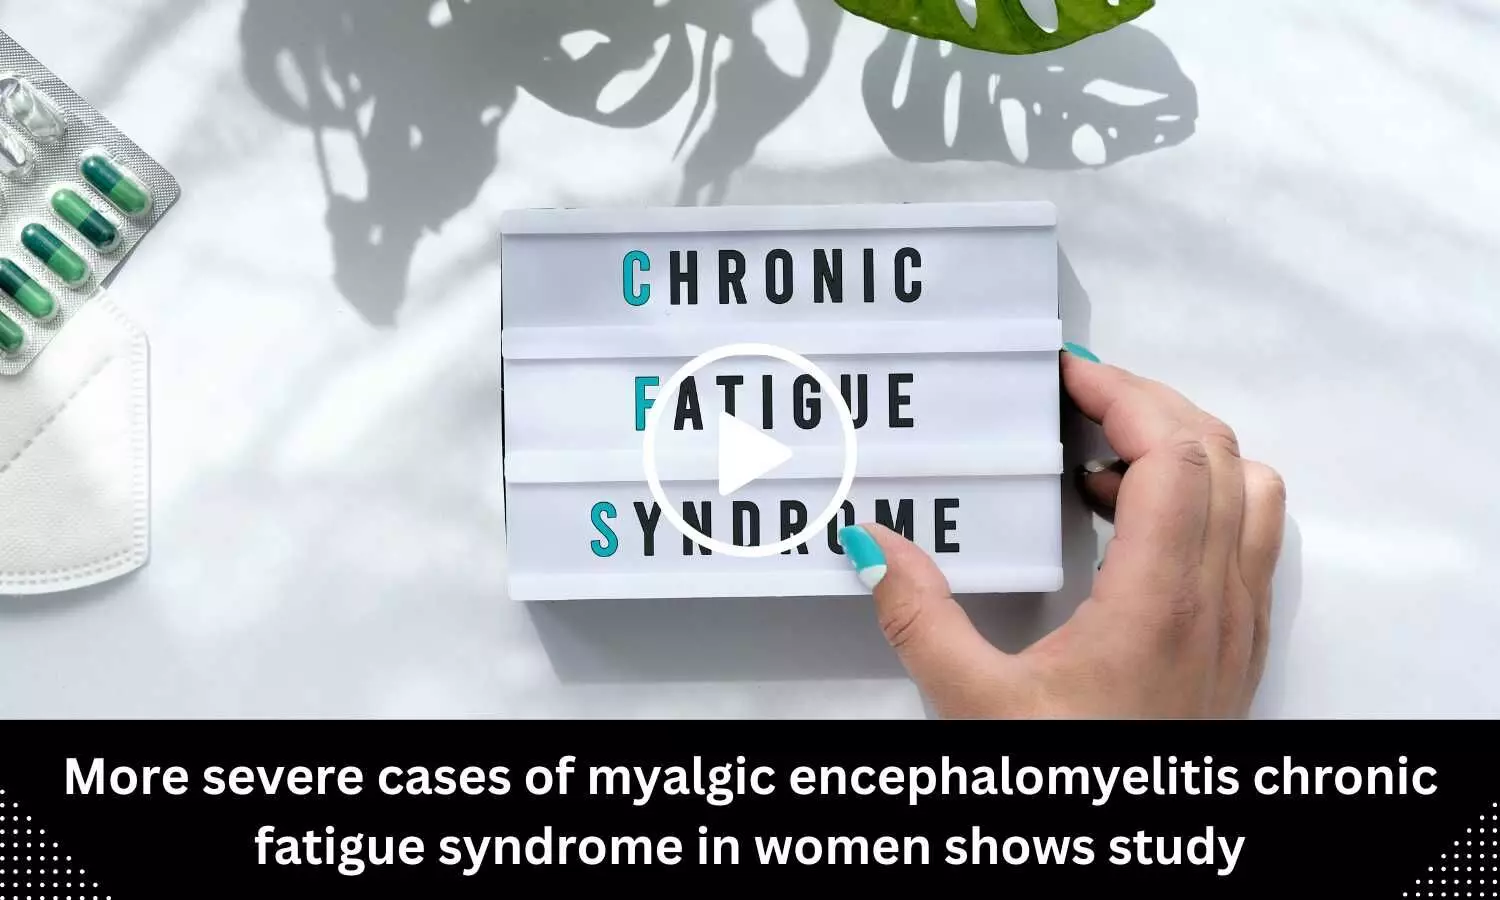 More severe cases of myalgic encephalomyelitis chronic fatigue syndrome in women shows study